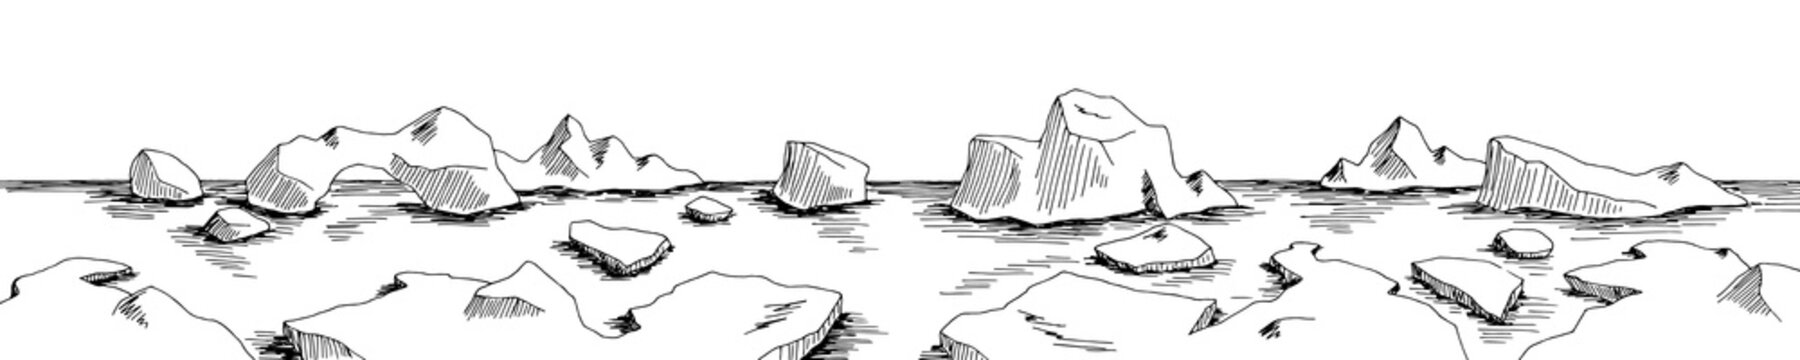 Arctic sea iceberg graphic black white long sketch illustration vector 